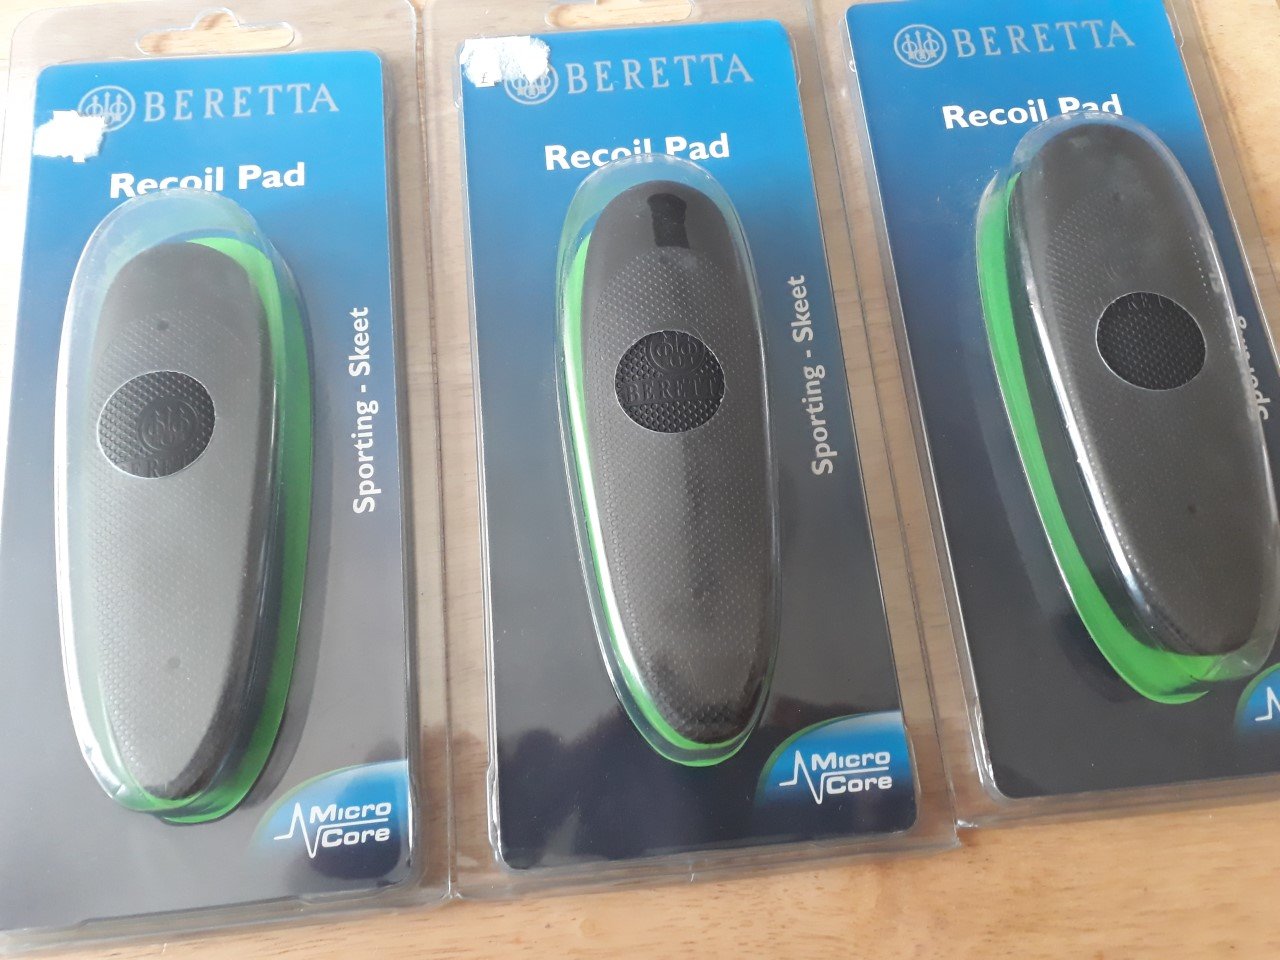 Beretta Micro Core recoil pads,new